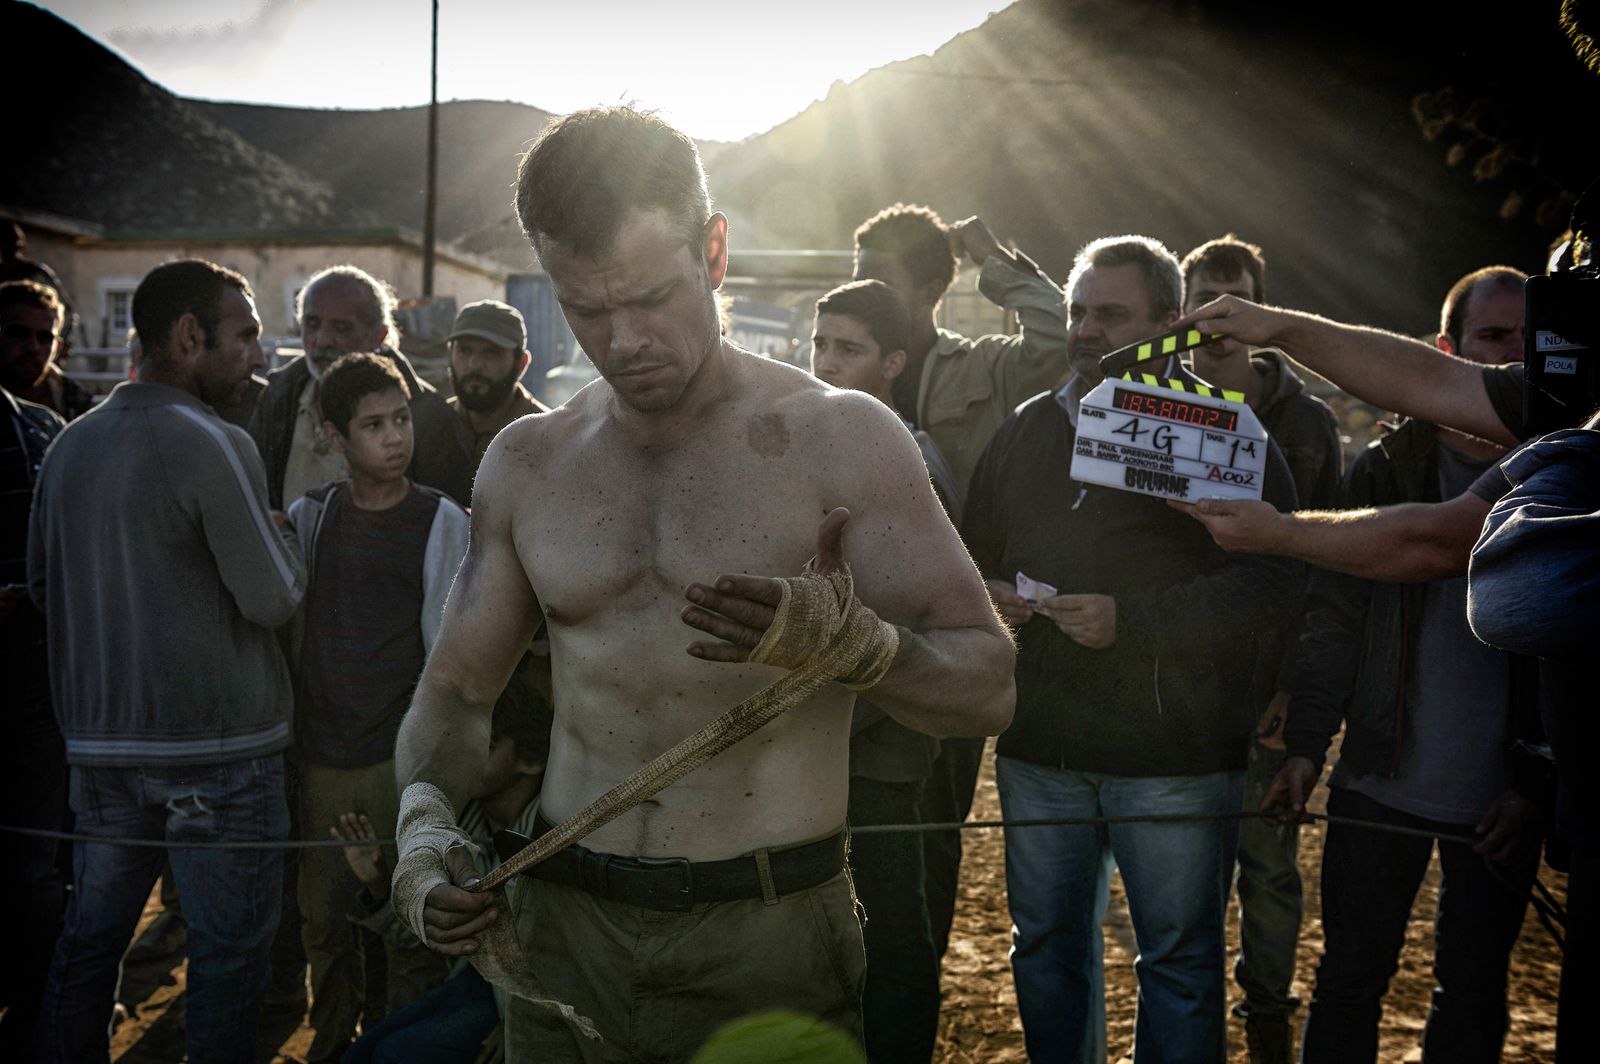 Jason Bourne (2016) - fotografie